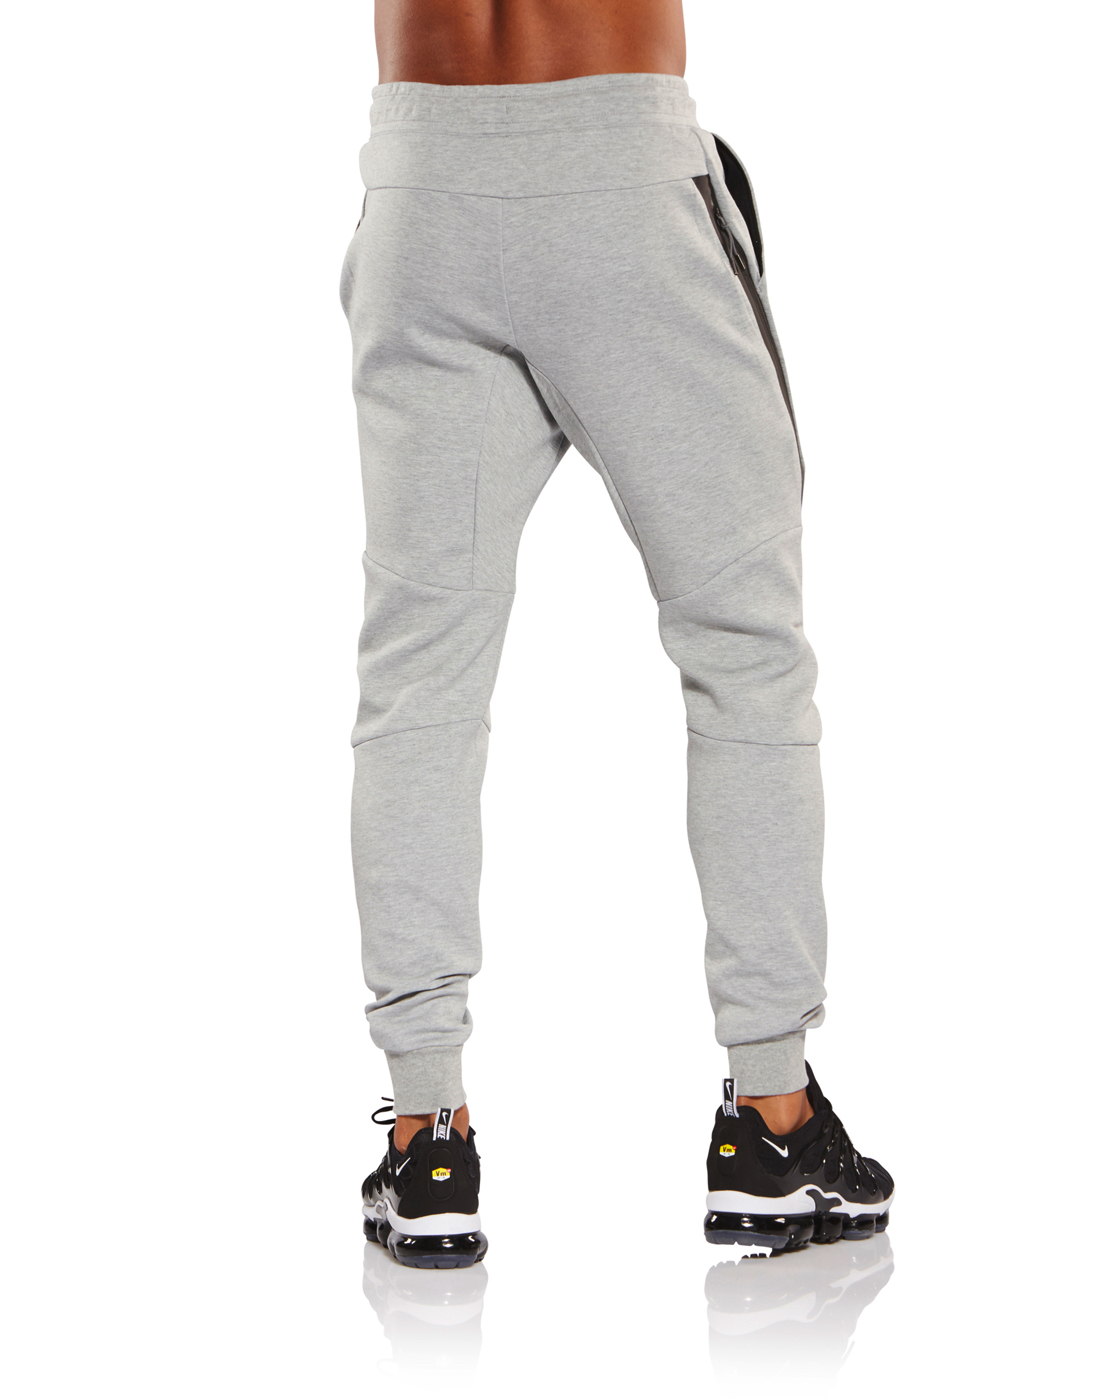 Nike Mens Tech Fleece Joggers - Grey | Life Style Sports UK